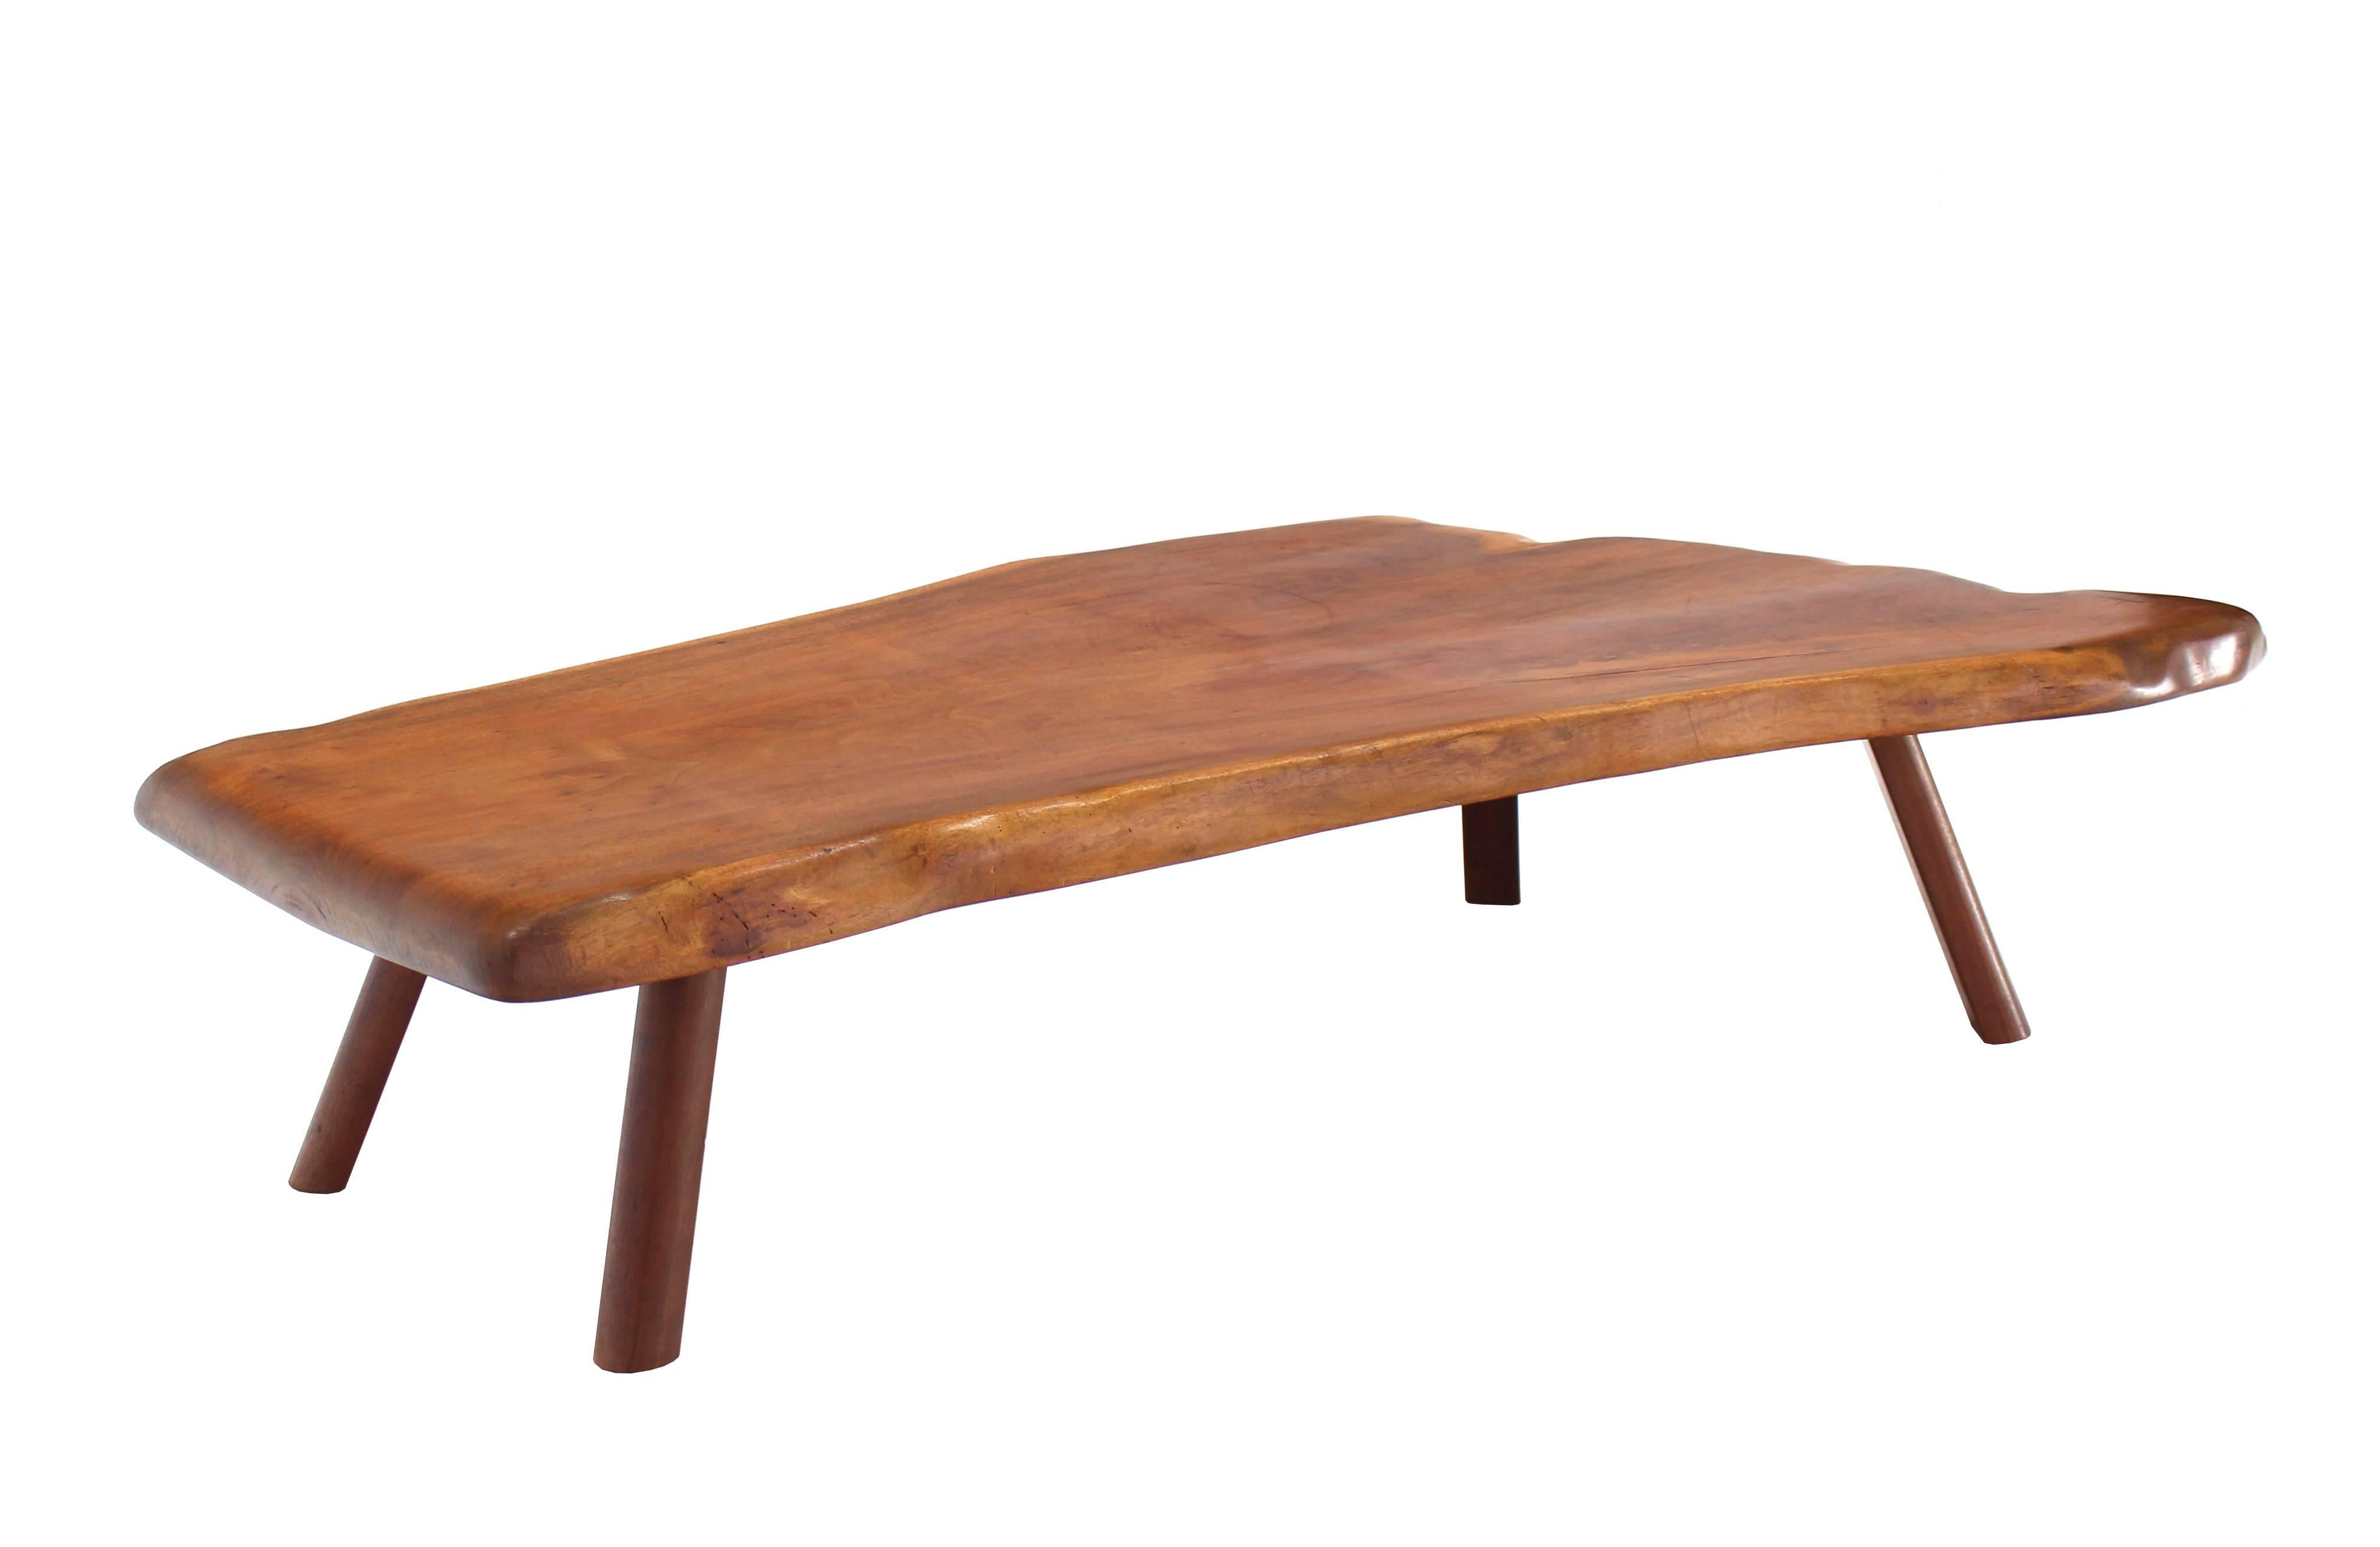 Natural Mid-Century Modern heavy slab wood top coffee table.
  